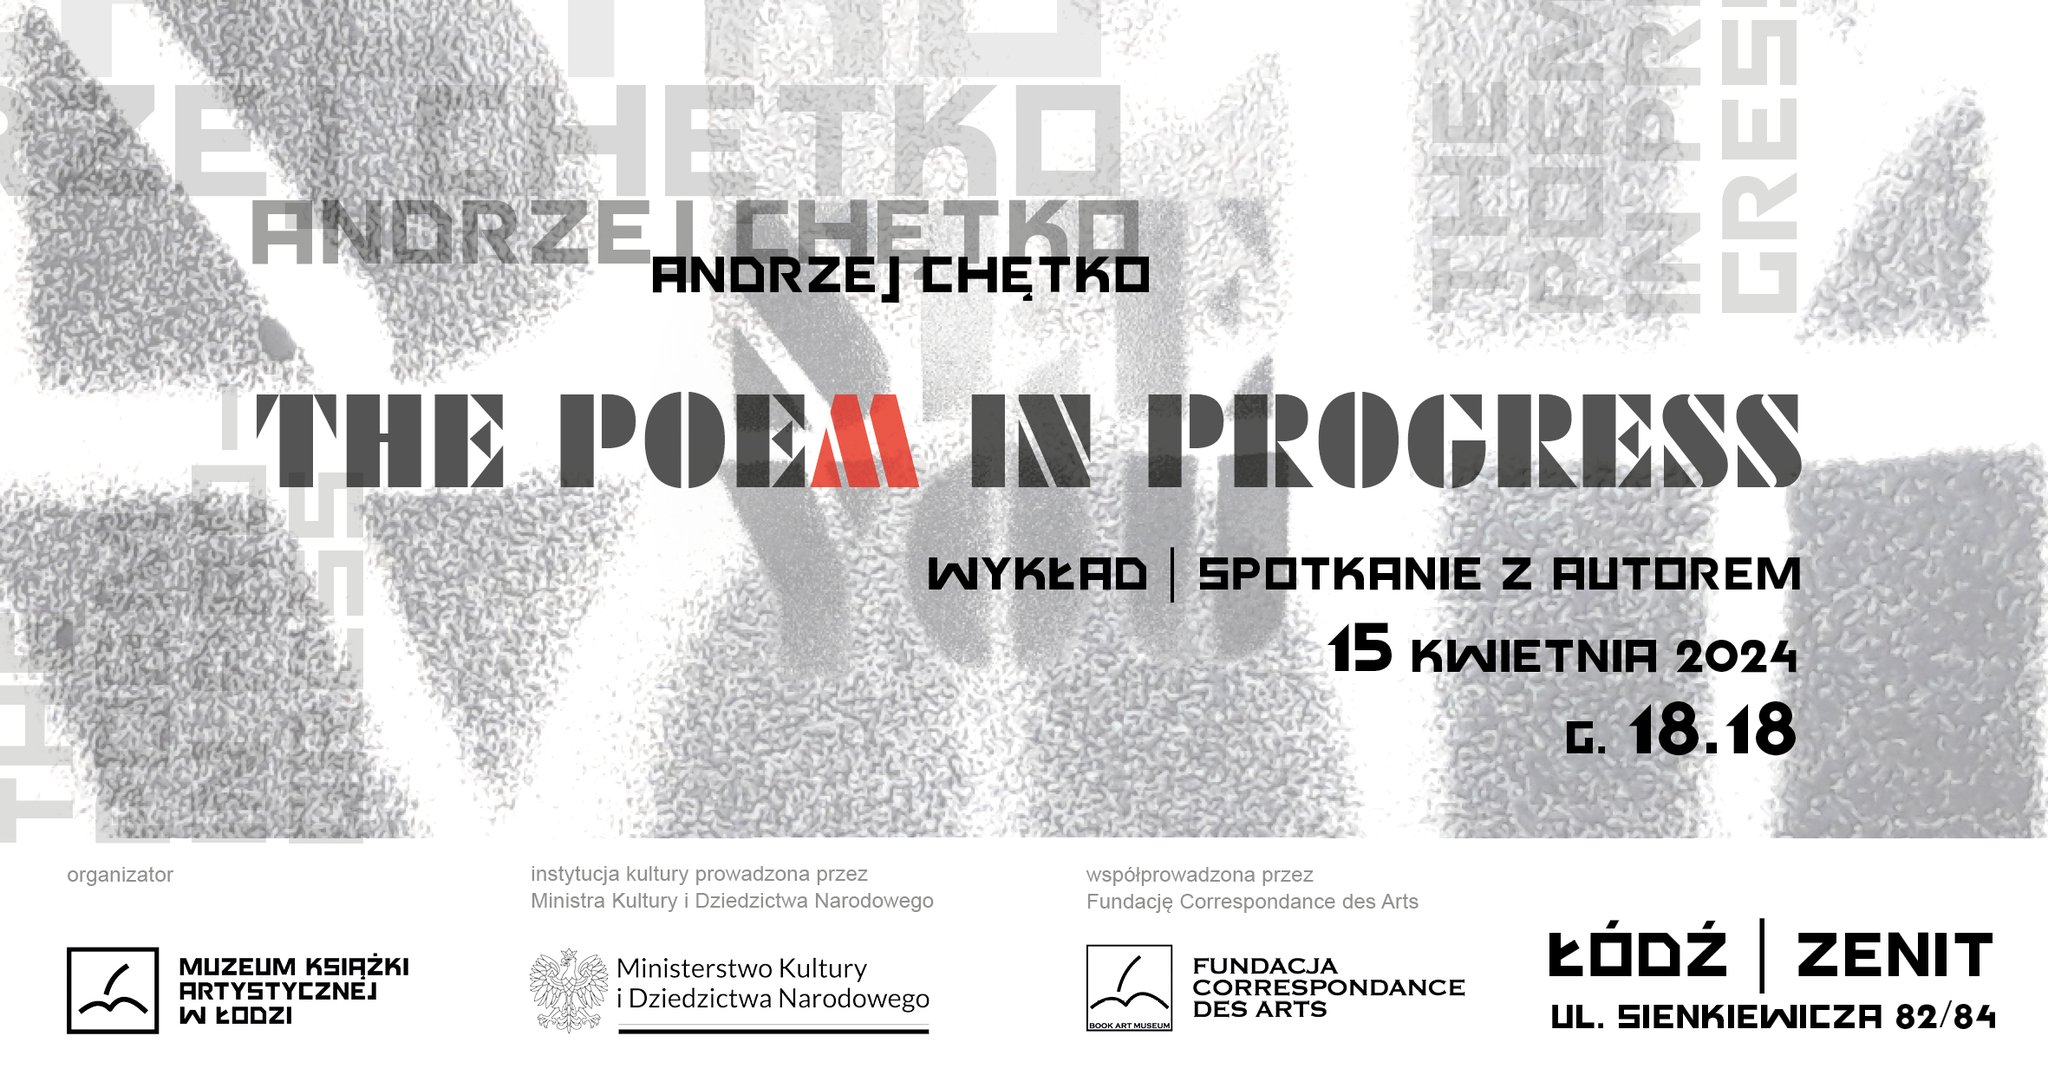 The Poem in Progress – Andrzej Chętko